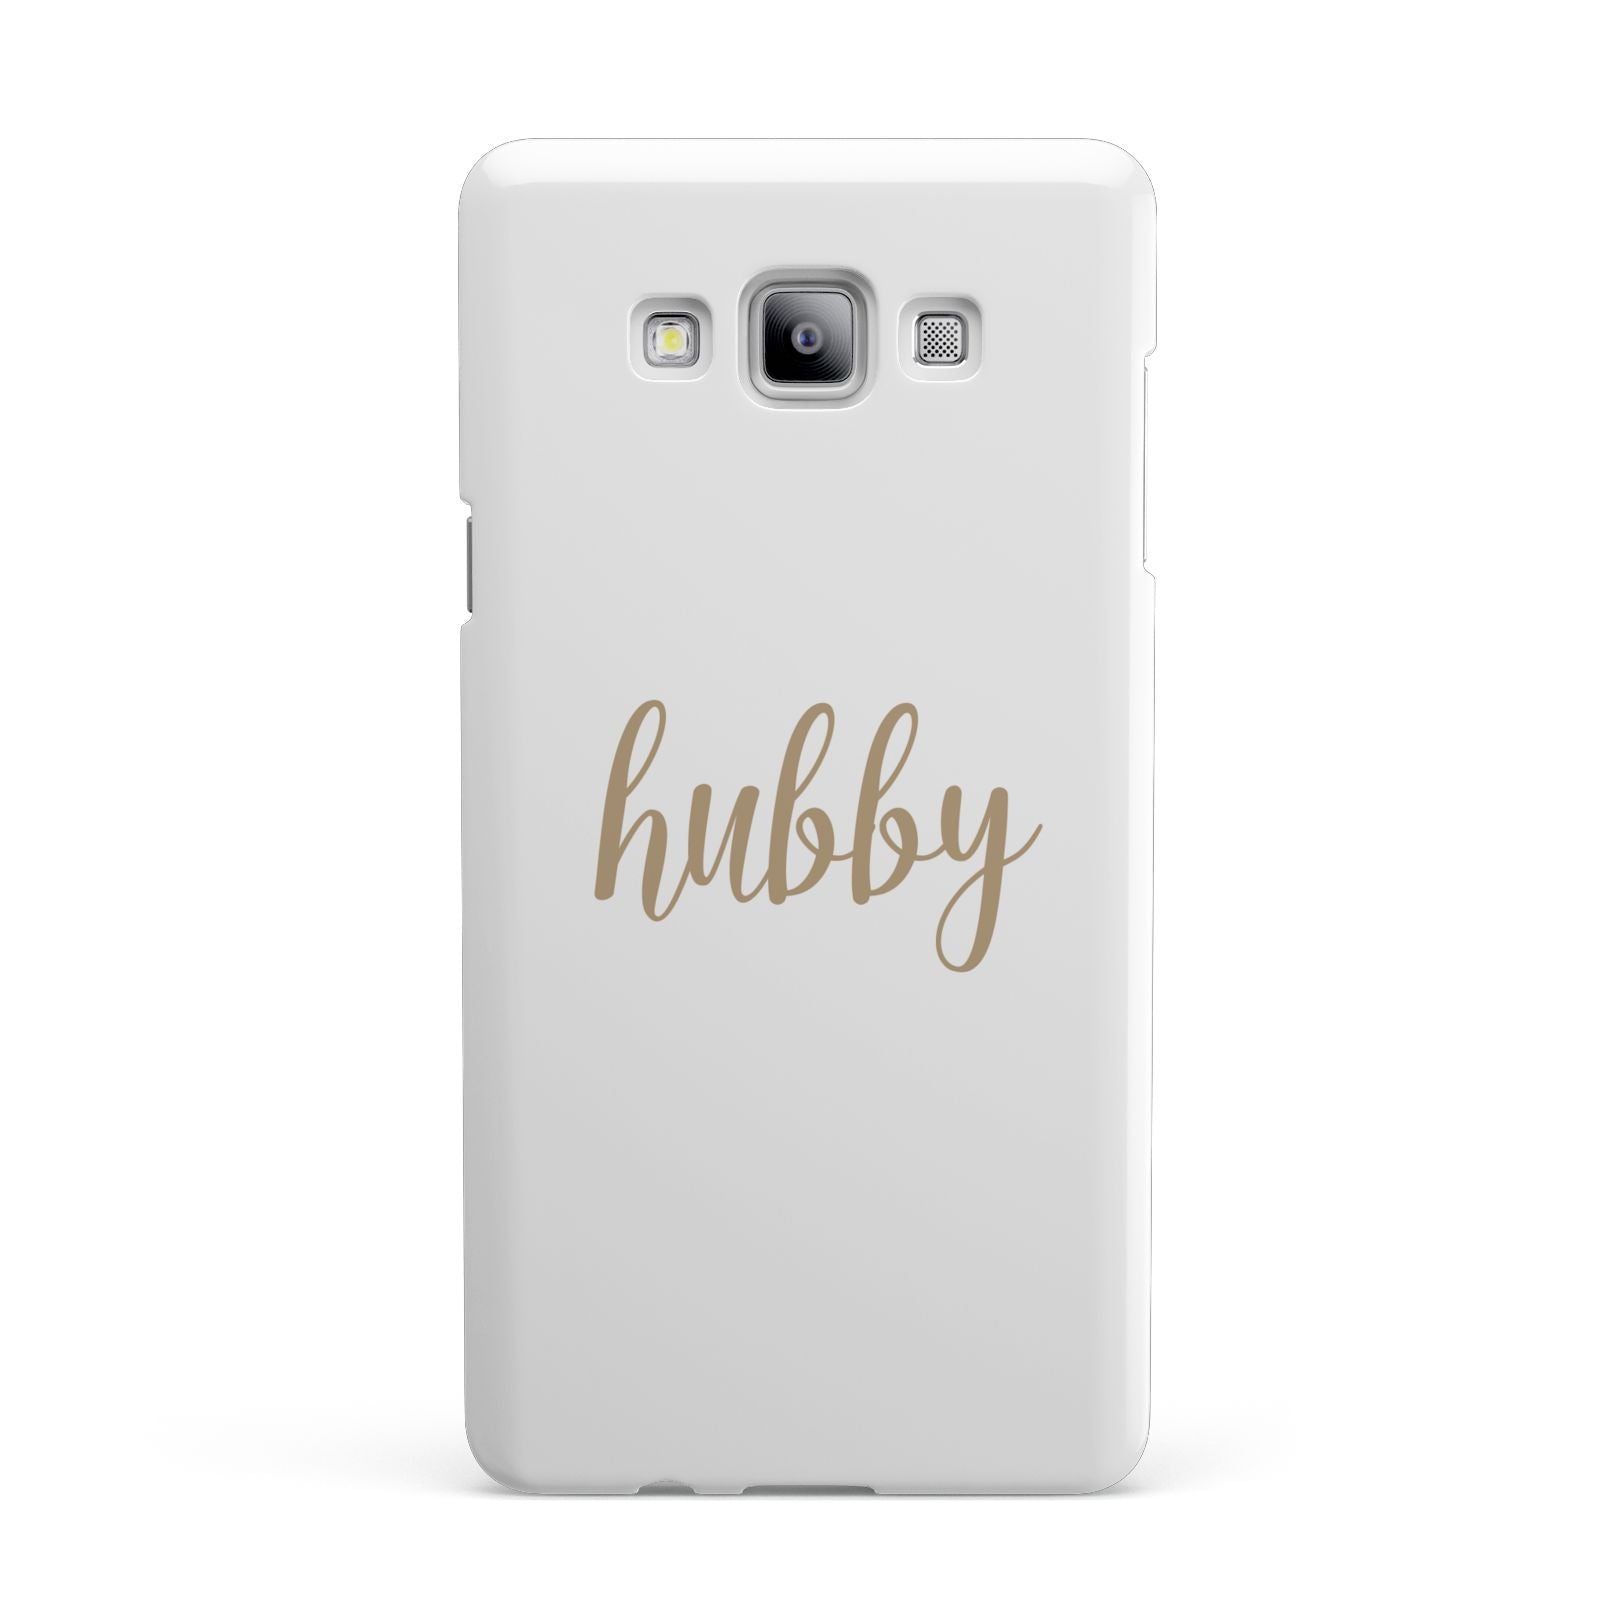 Hubby Samsung Galaxy A7 2015 Case